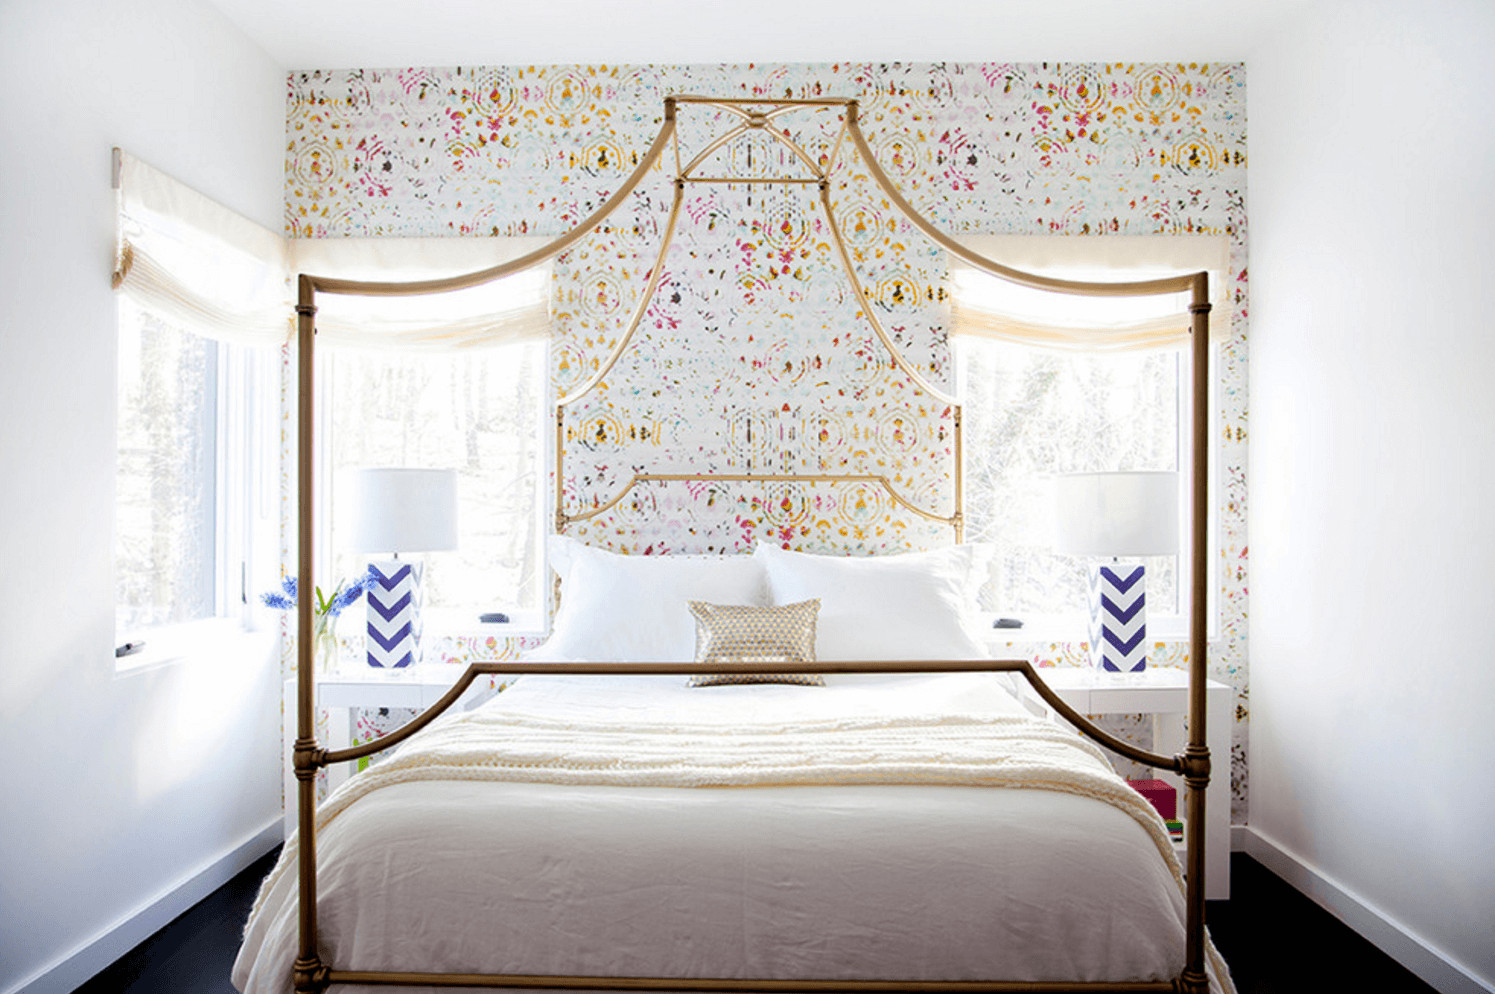 Wallpaper Accent Wall Bedroom Inspirational 28 Stunning Wallpaper Ideas Your Home Needs